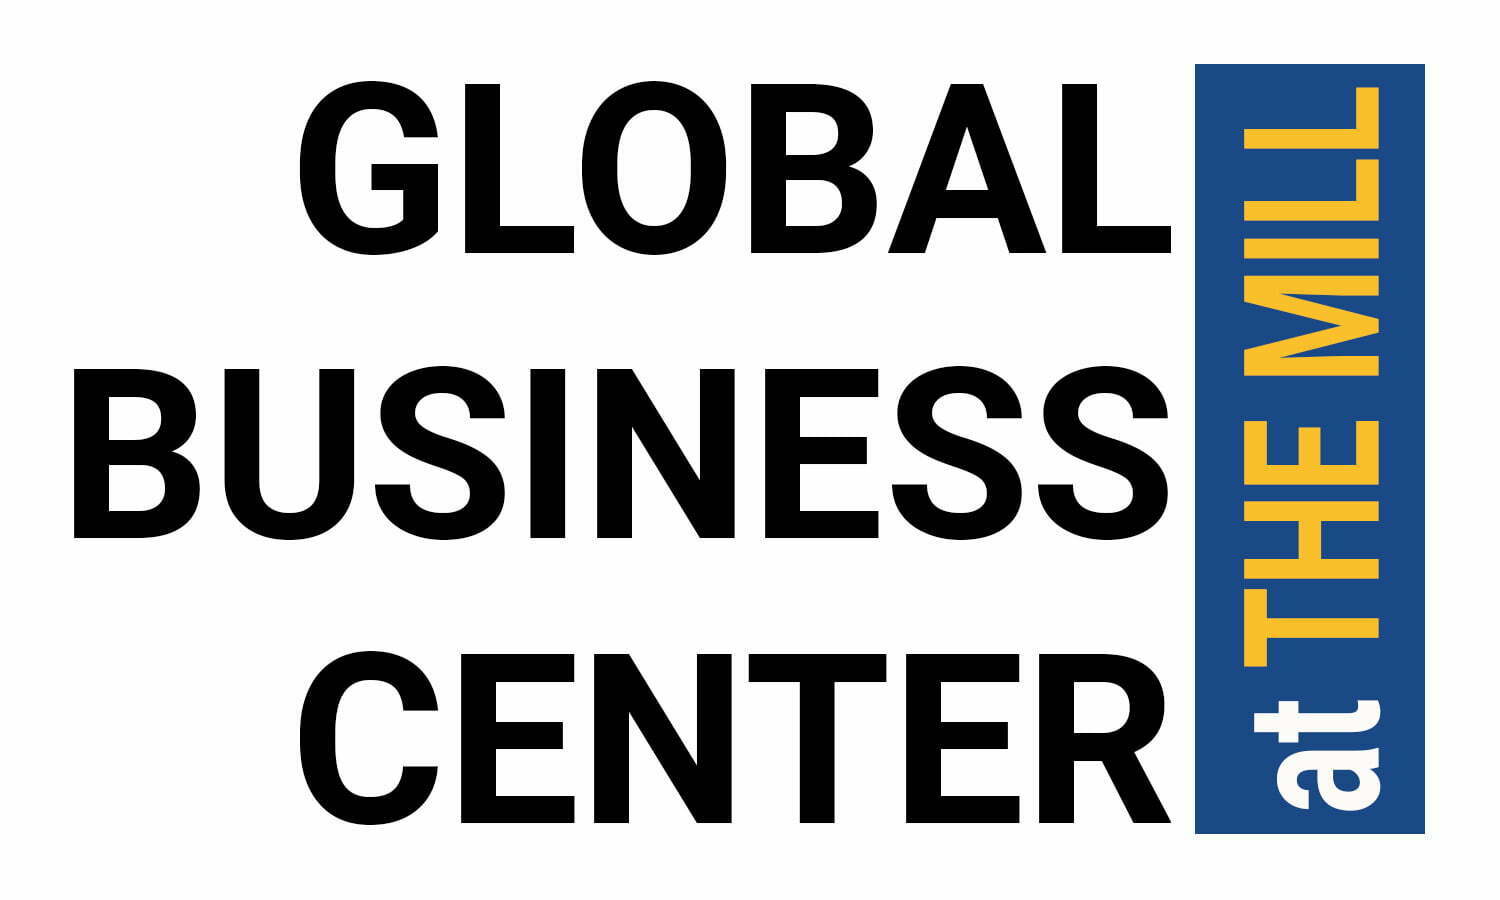 Global Business Center logo